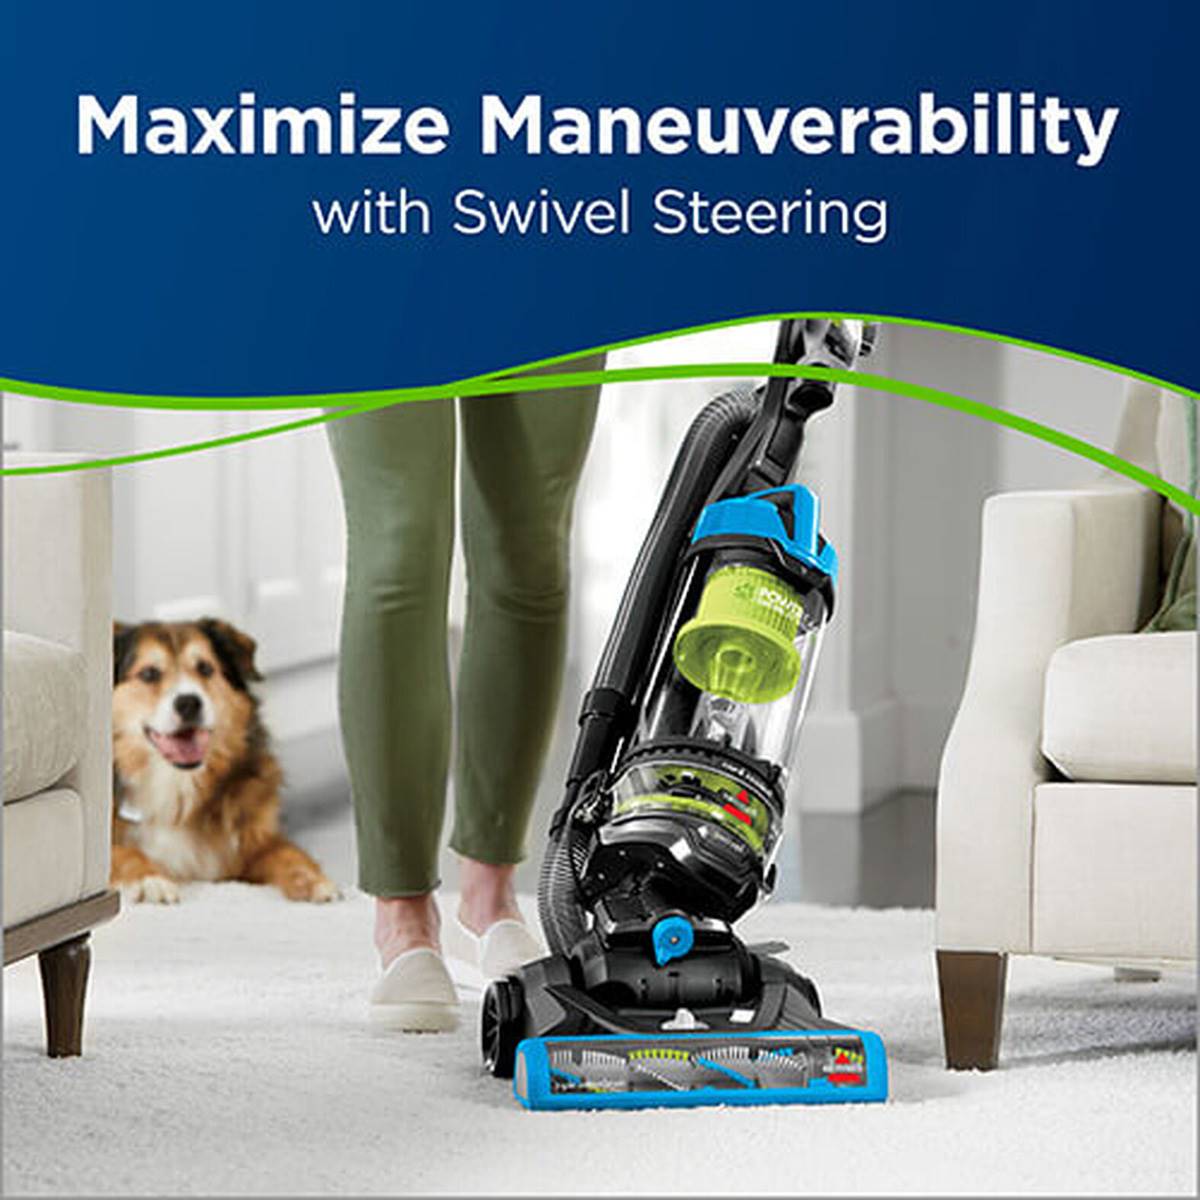 Famous Maker Powerease Swivel Pet Rewind Vacuum